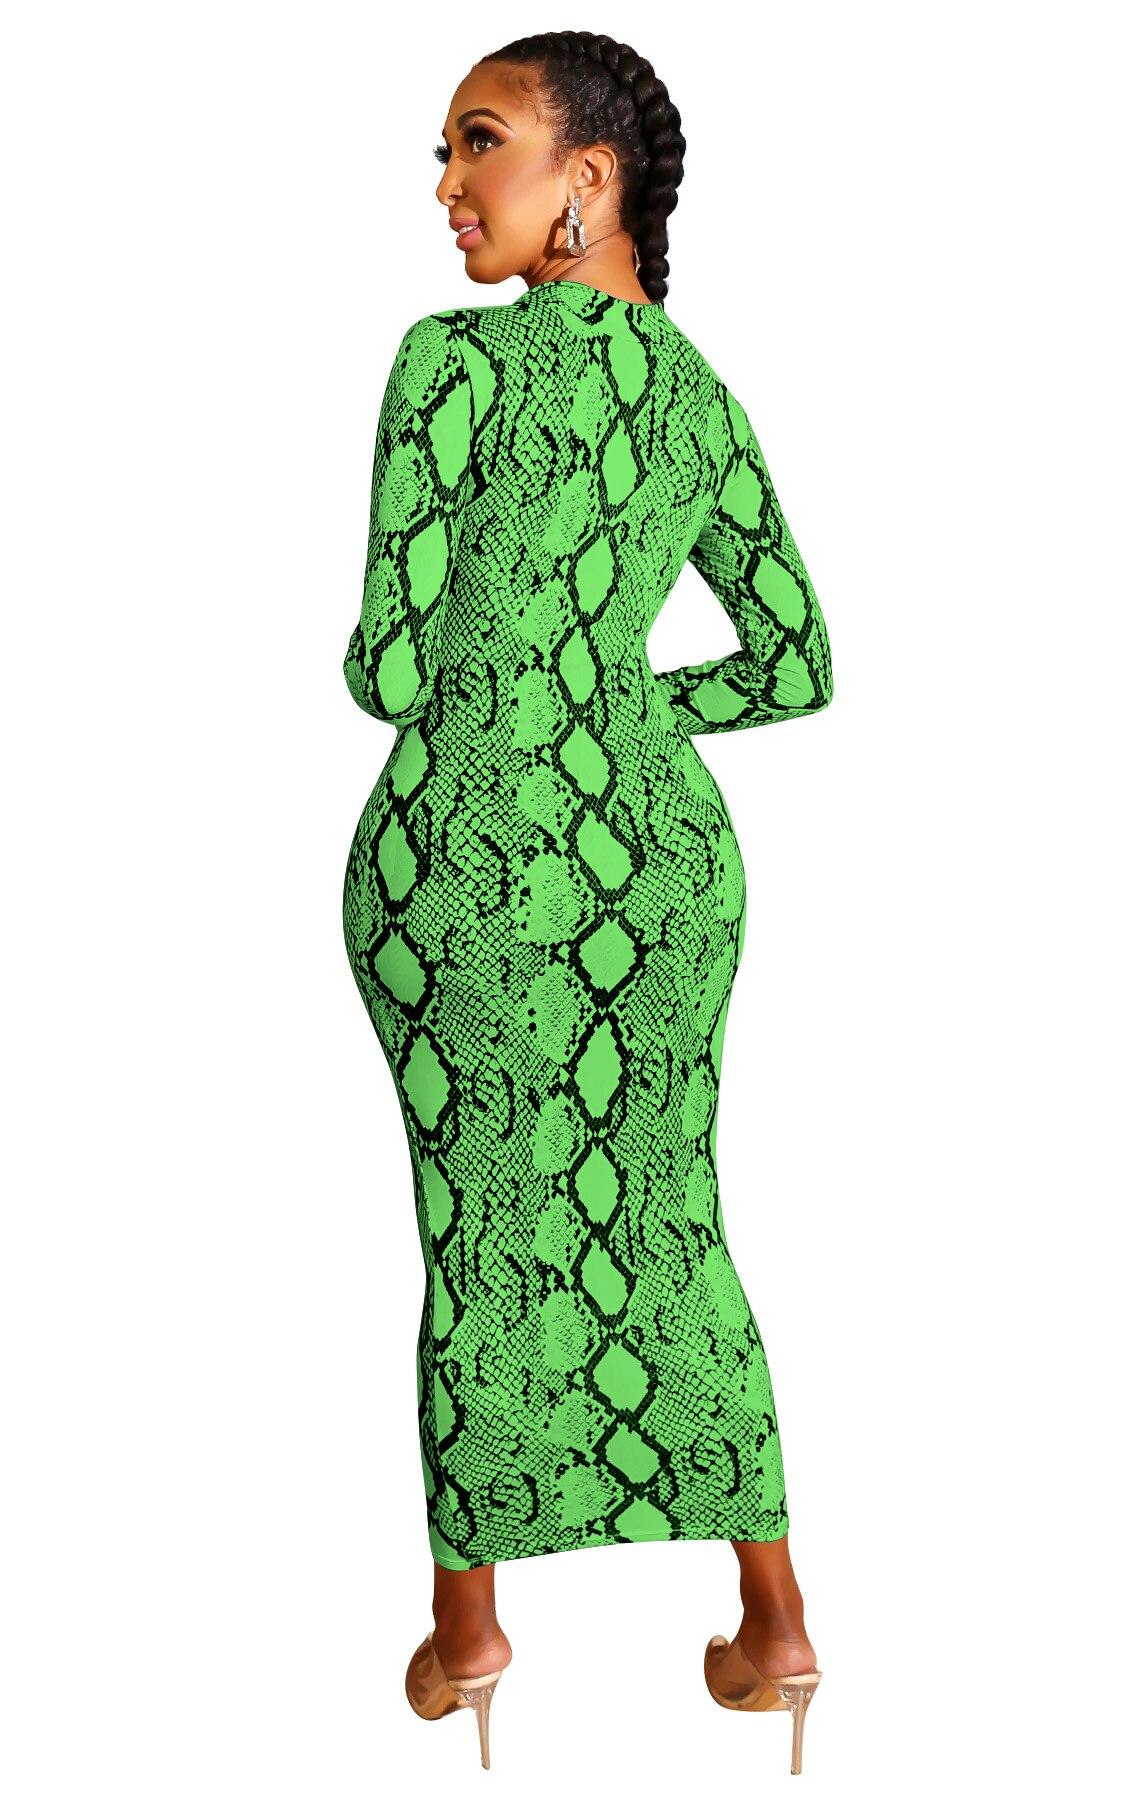 Women SnakeSkin Dress Sexy Print Womens Snake Skin sheath Long Sleeve Zipper Deep V Midi Bodycon Elegant Party Dress